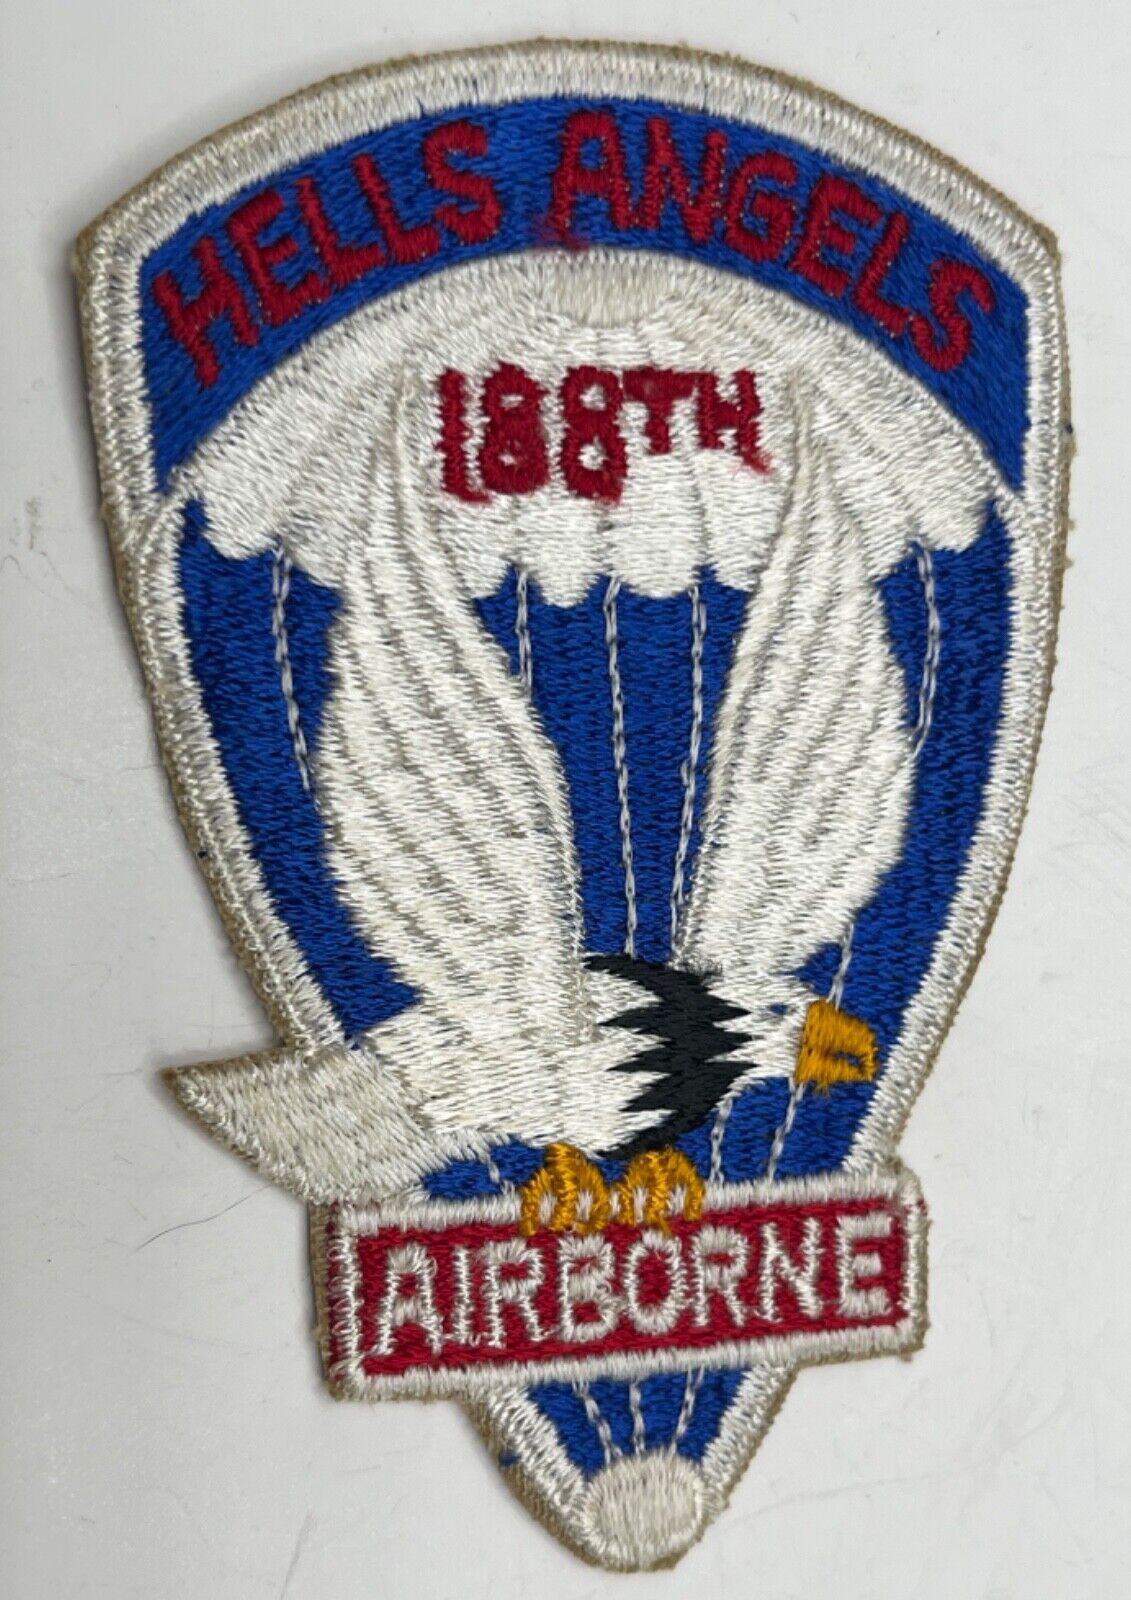 RARE ORIGINAL US 188th AIRBORNE INFANTRY PATCH HELLS ANGELS 1952  1957 WHITEBACK